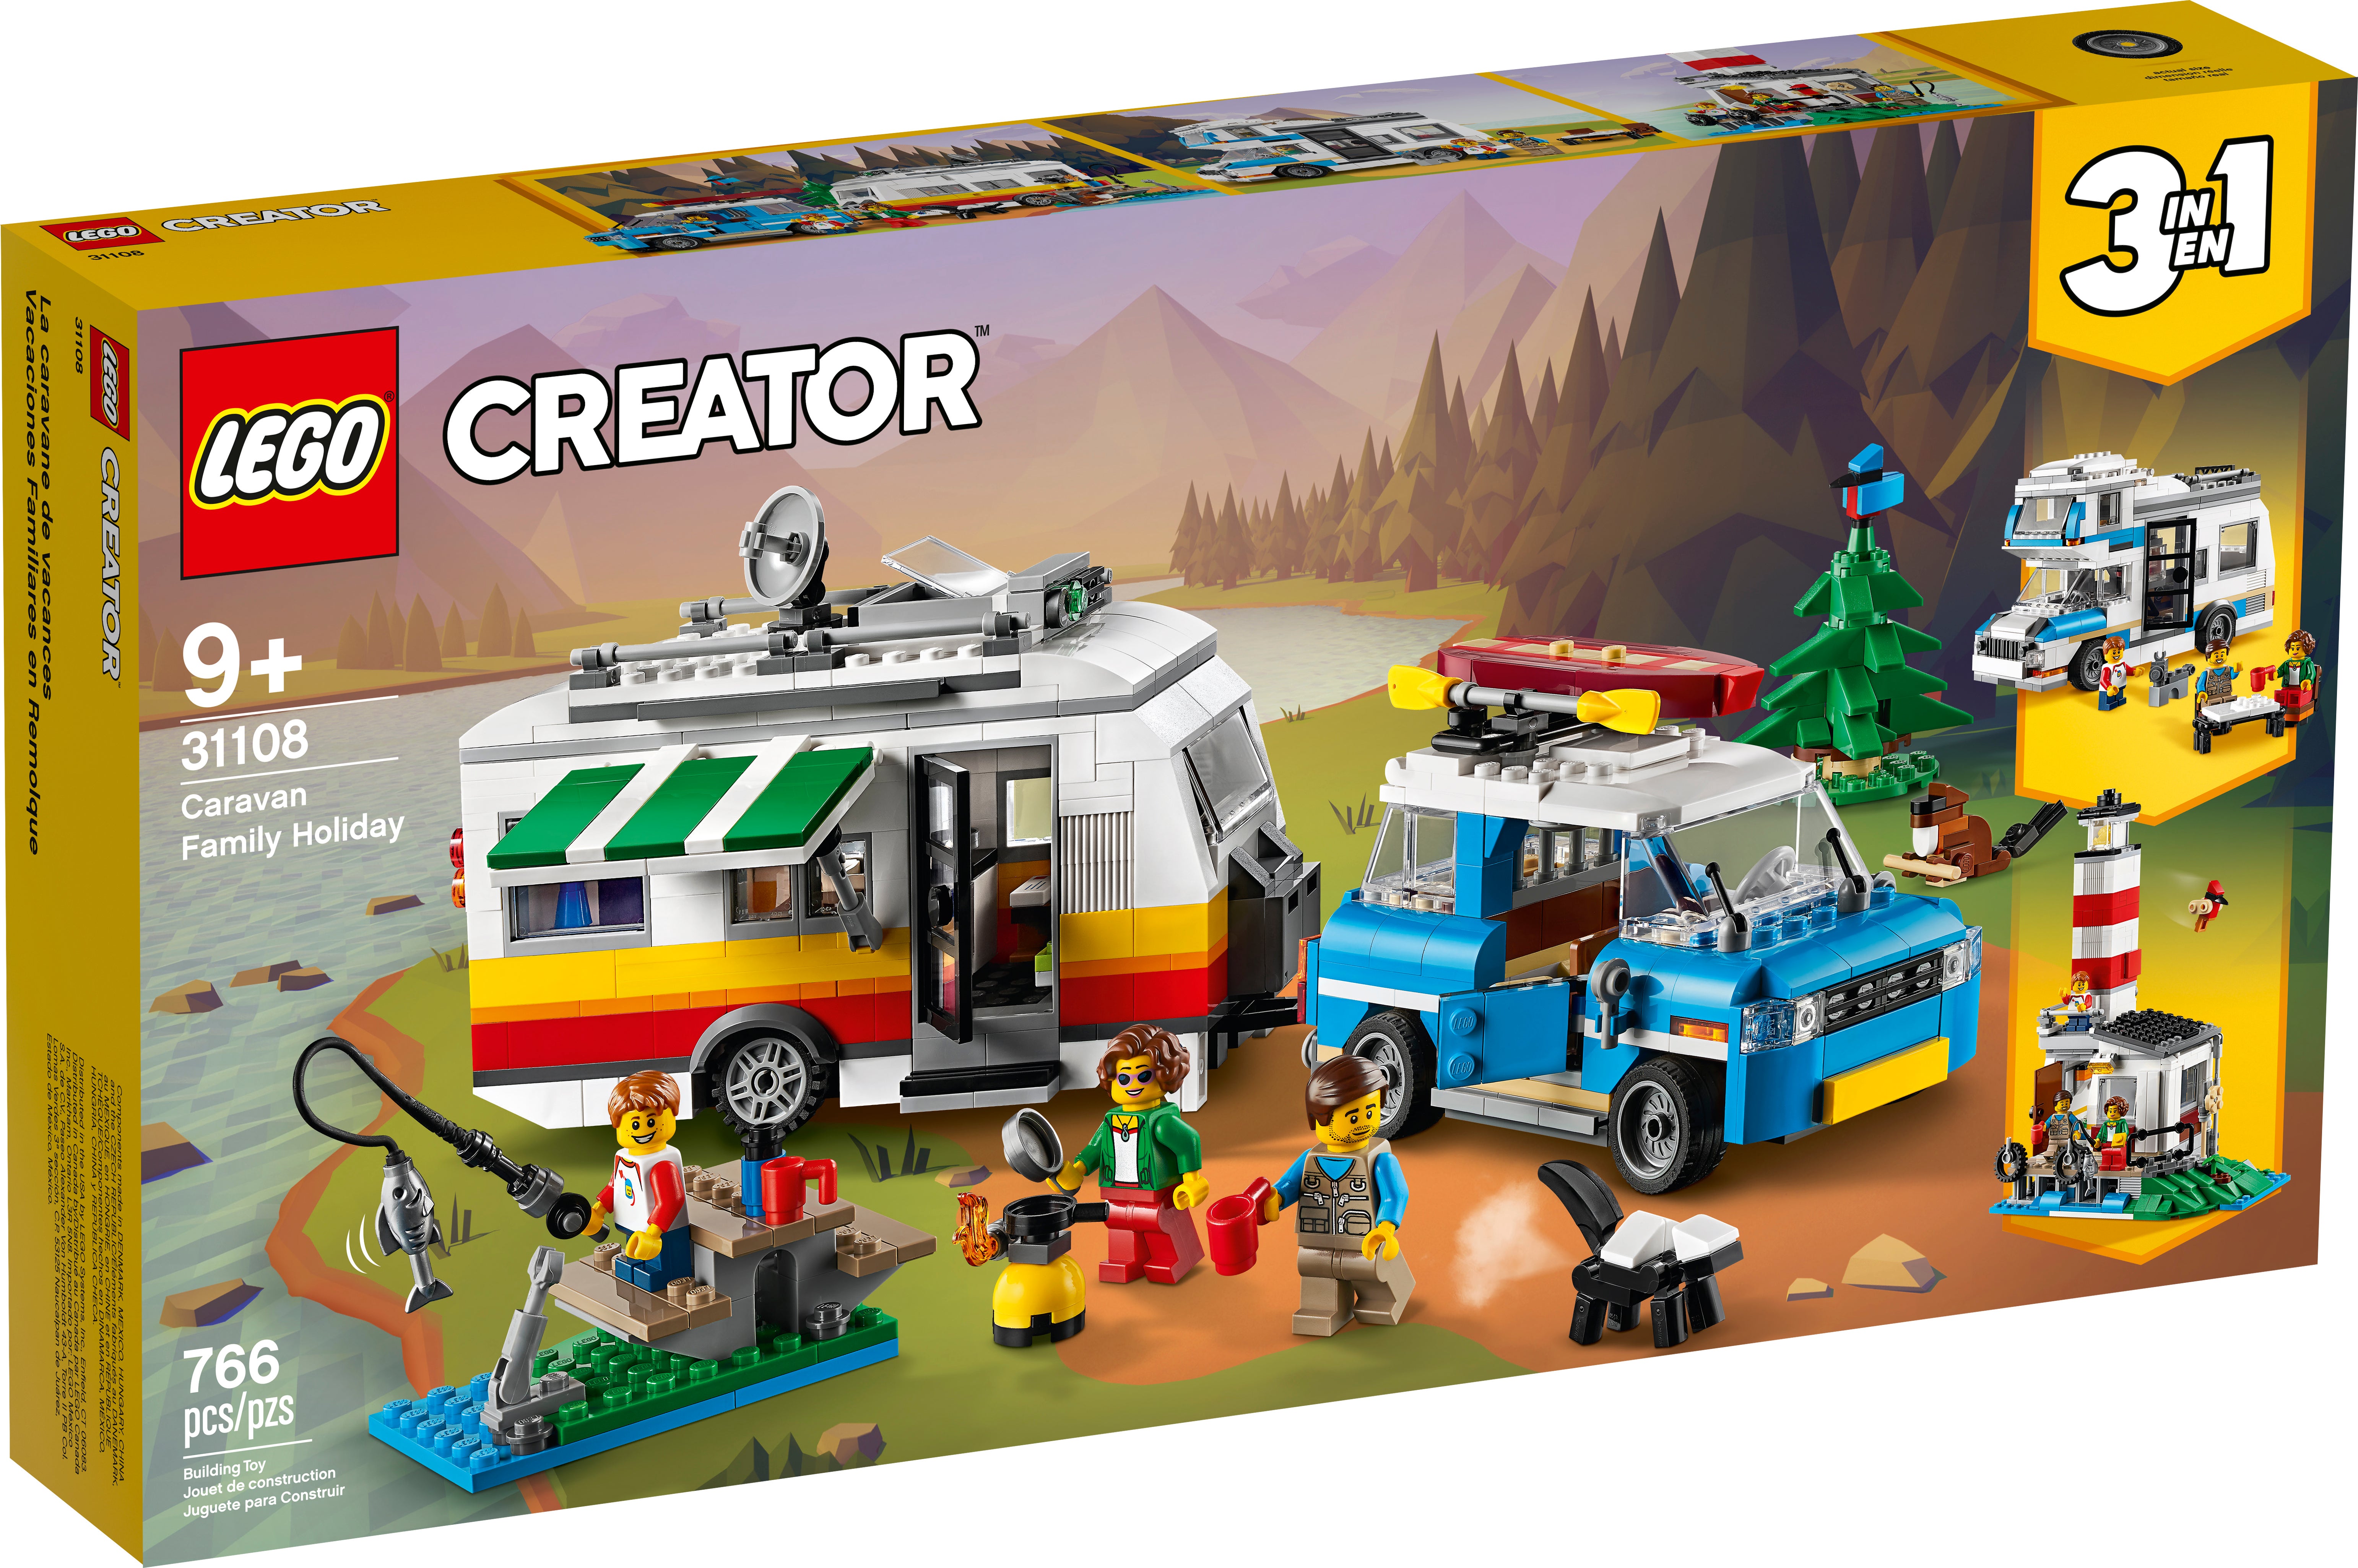 **Brand New in Box** 31108 LEGO Creator Caravan Family Holiday